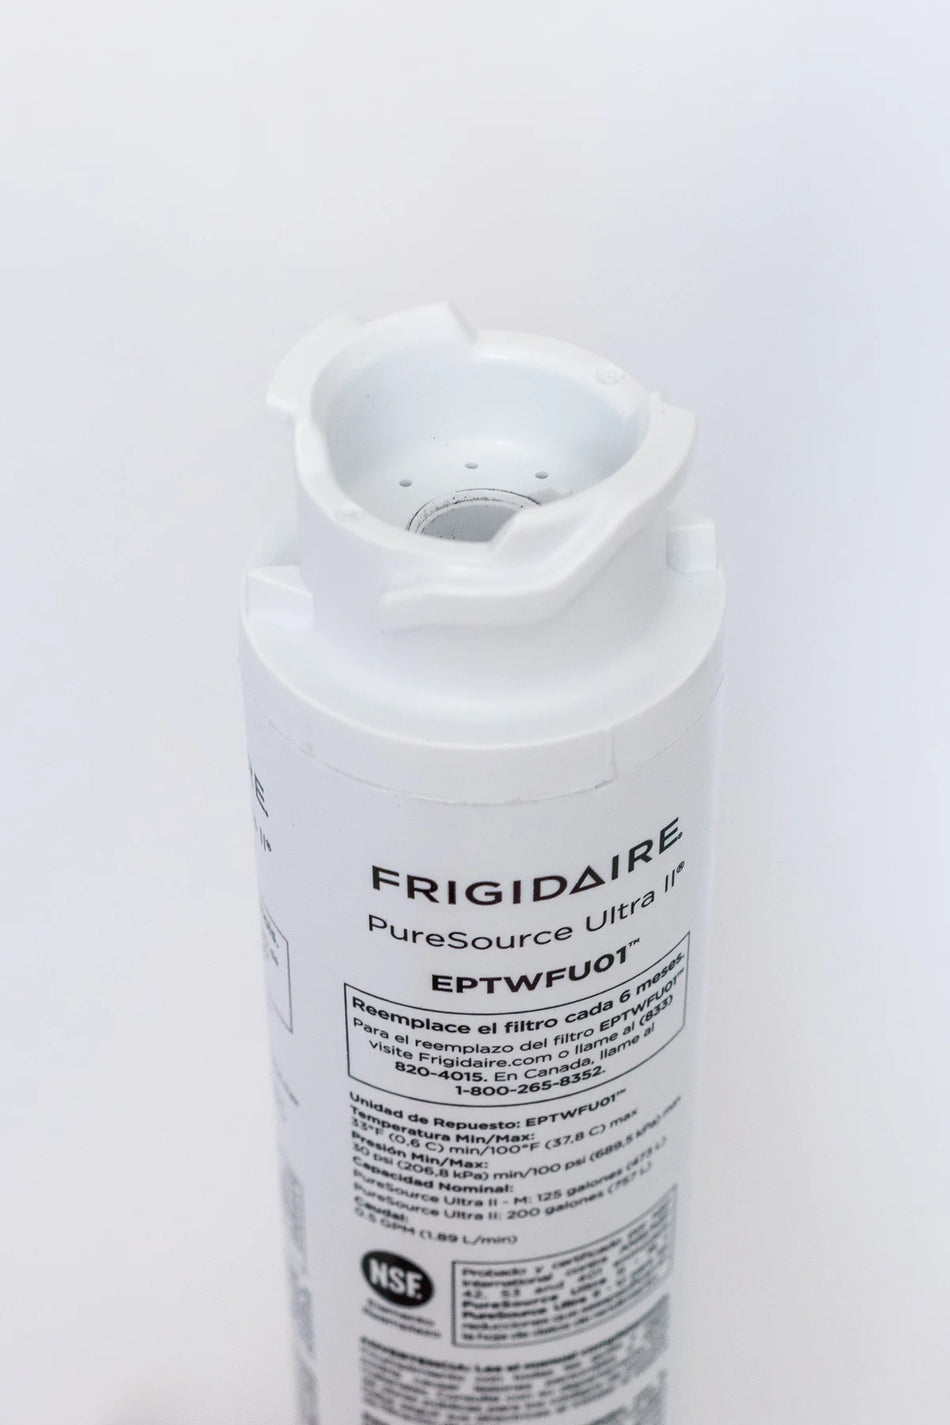 Frigidaire EPTWFU01 PureSource Ultra II Refrigerator Water Filter, 2 pack